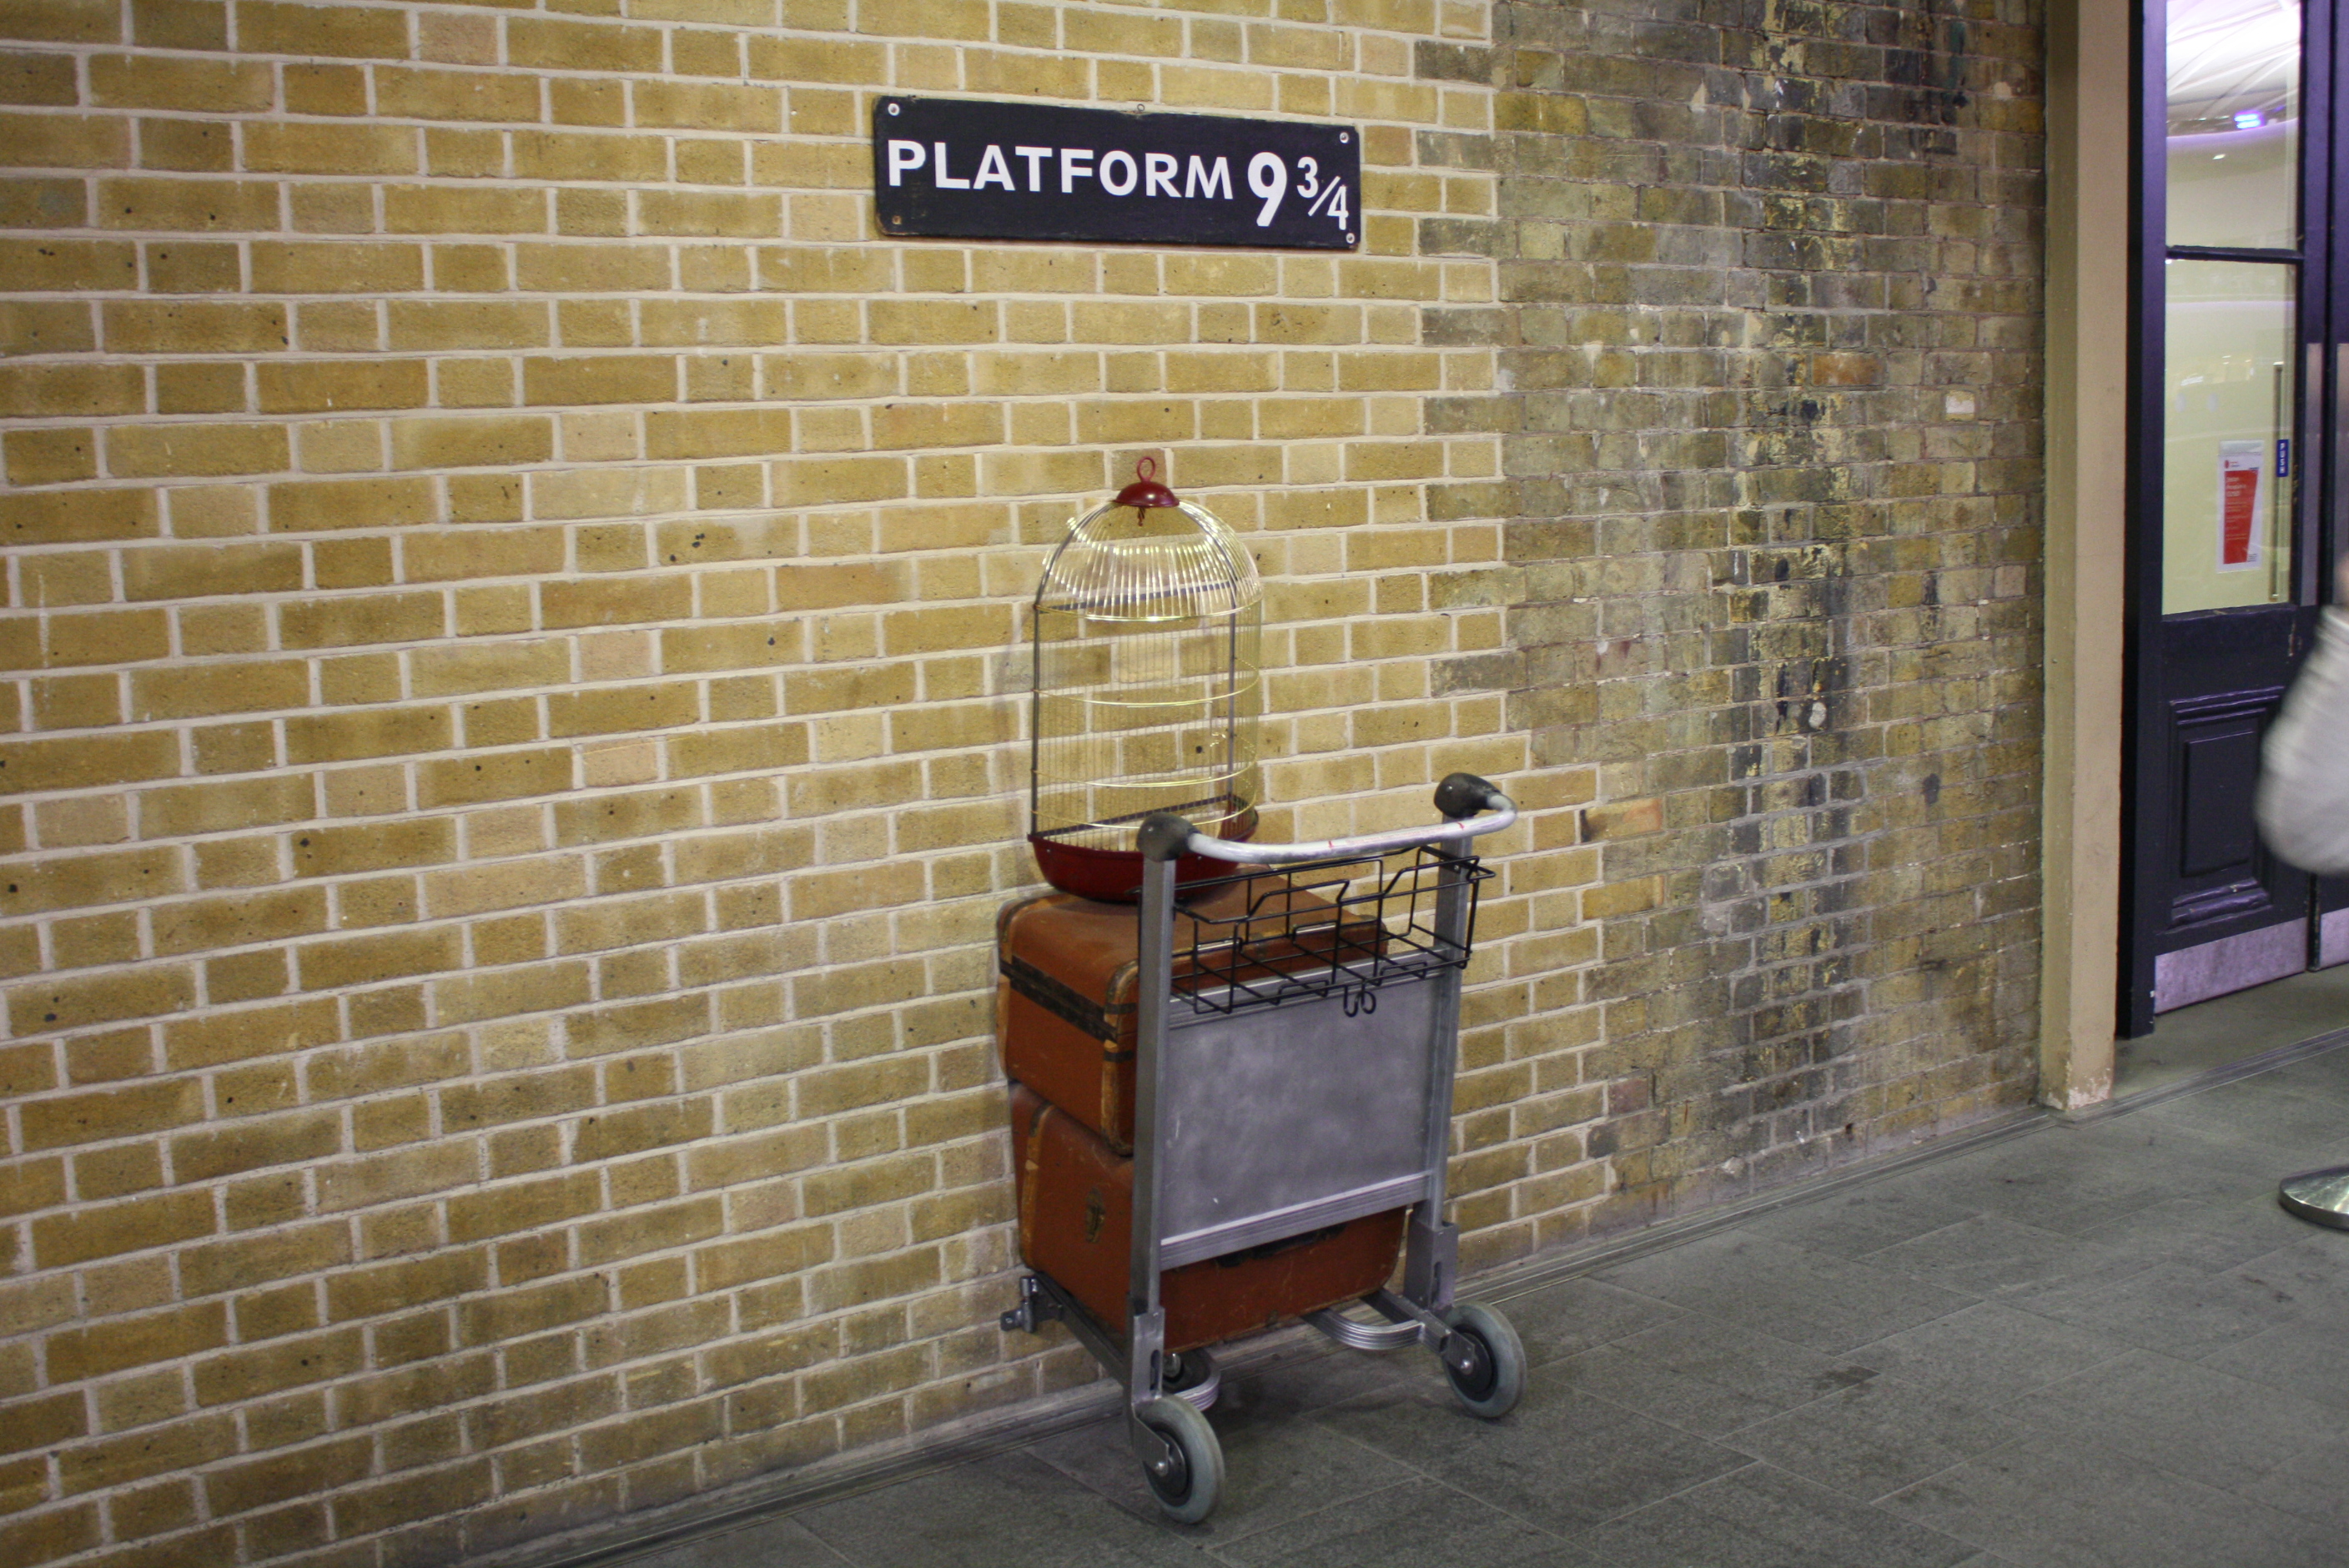 Harry Potter and the Platform 9 3/4 Kings Cross Station - Secret World